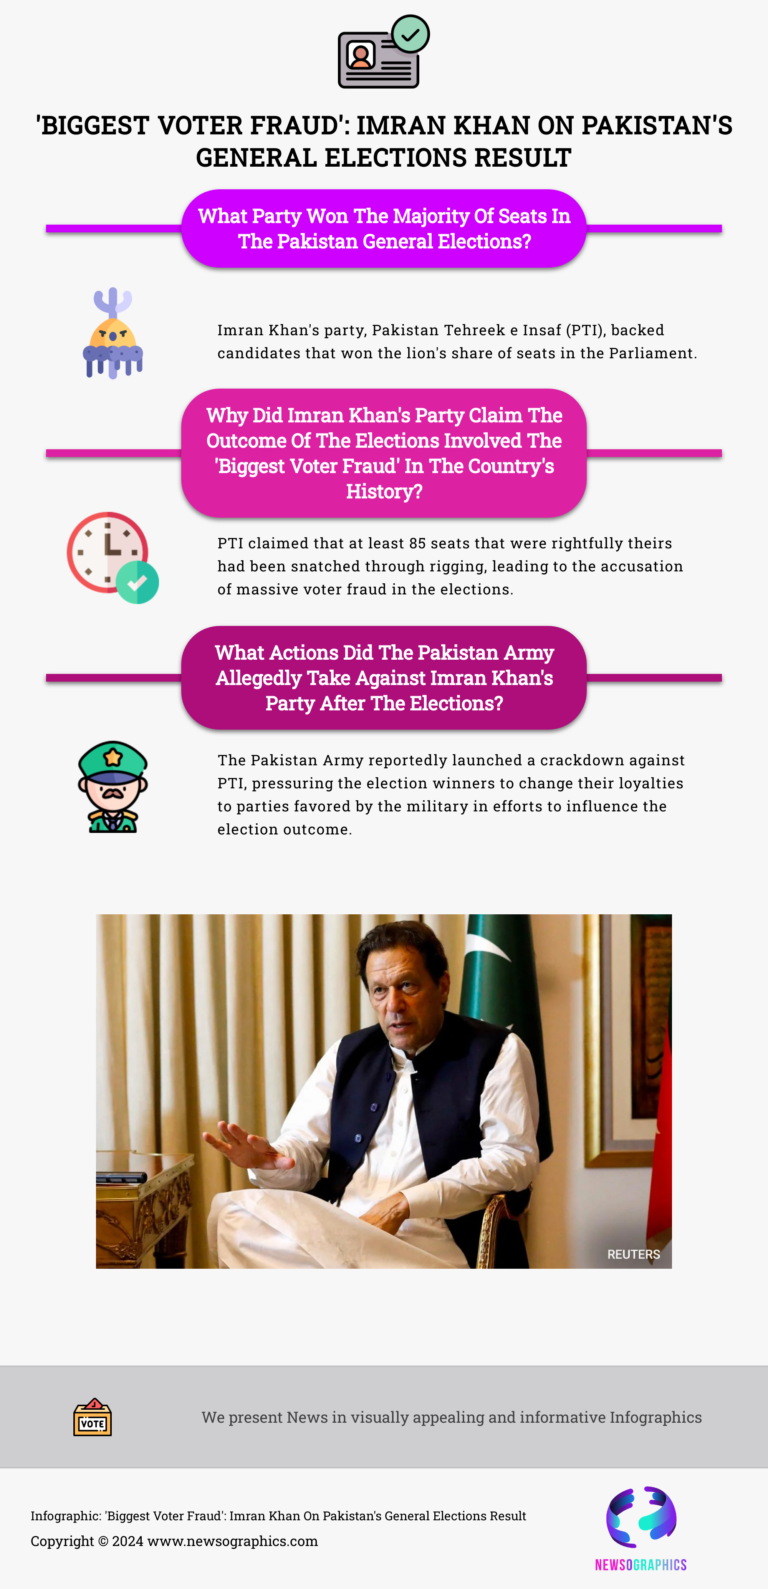 “Biggest Voter Fraud”: Imran Khan On Pakistan’s General Elections Result